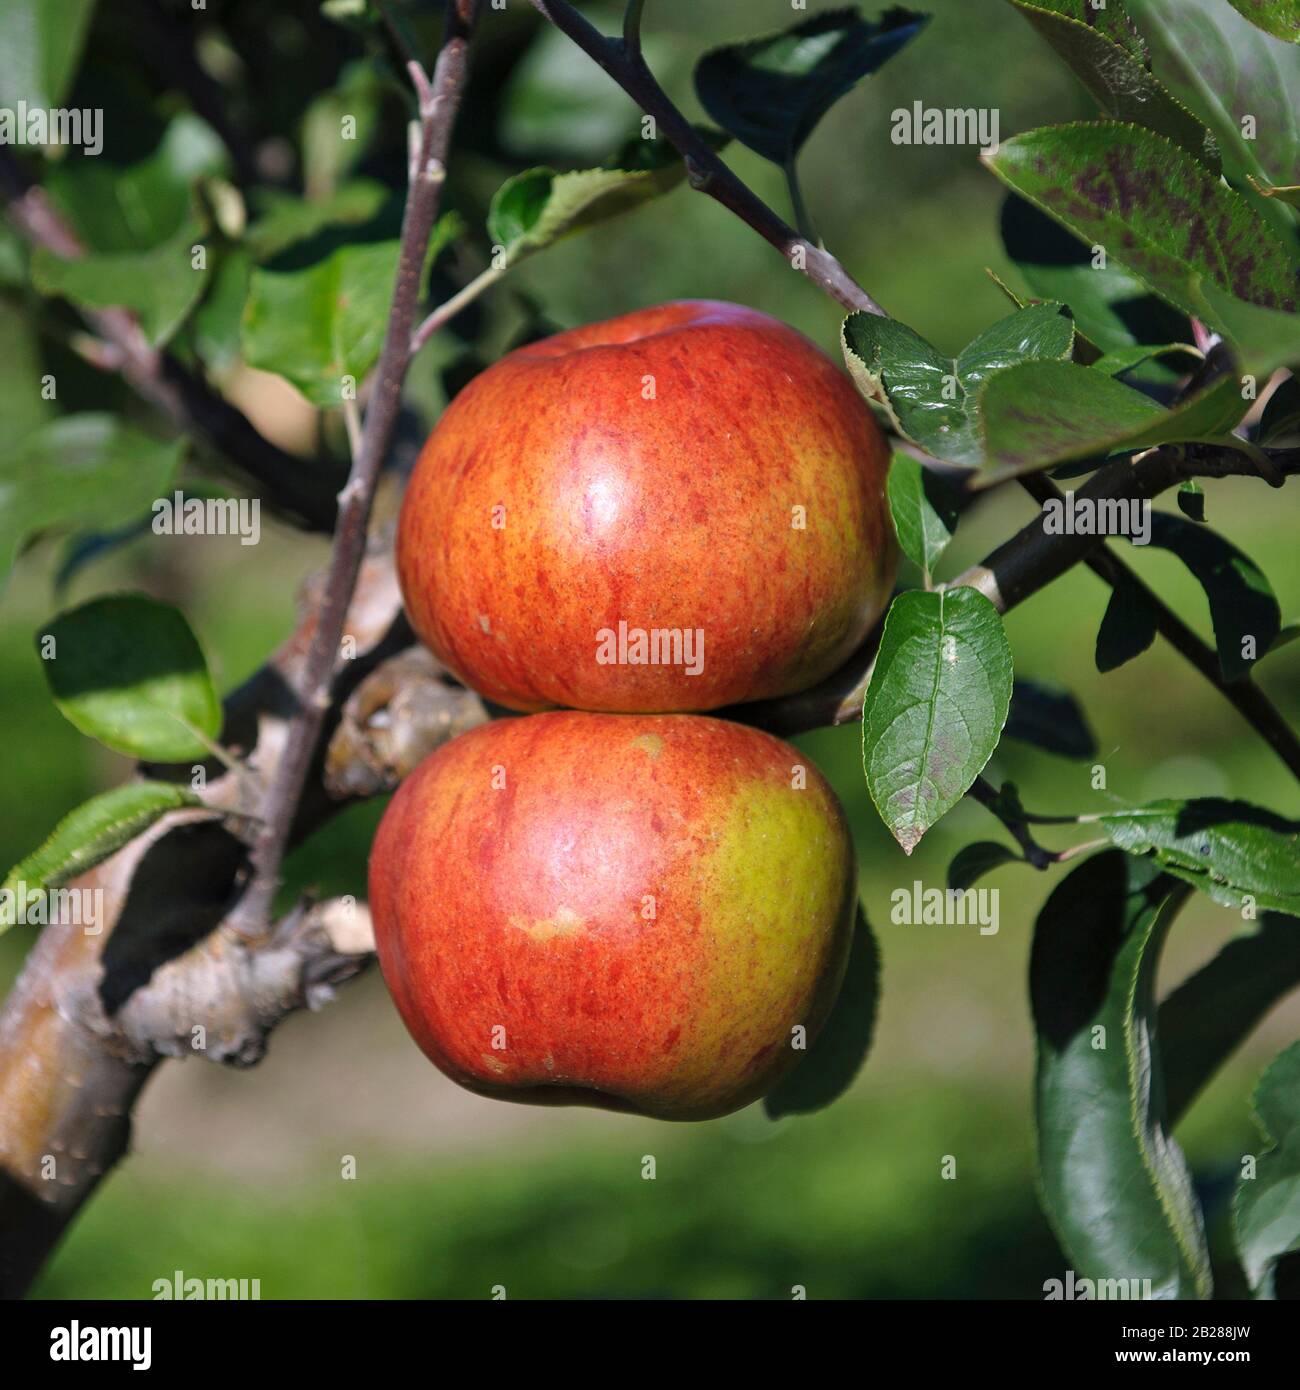 Apfel (Malus domestica 'Hauxapfel') Stock Photo